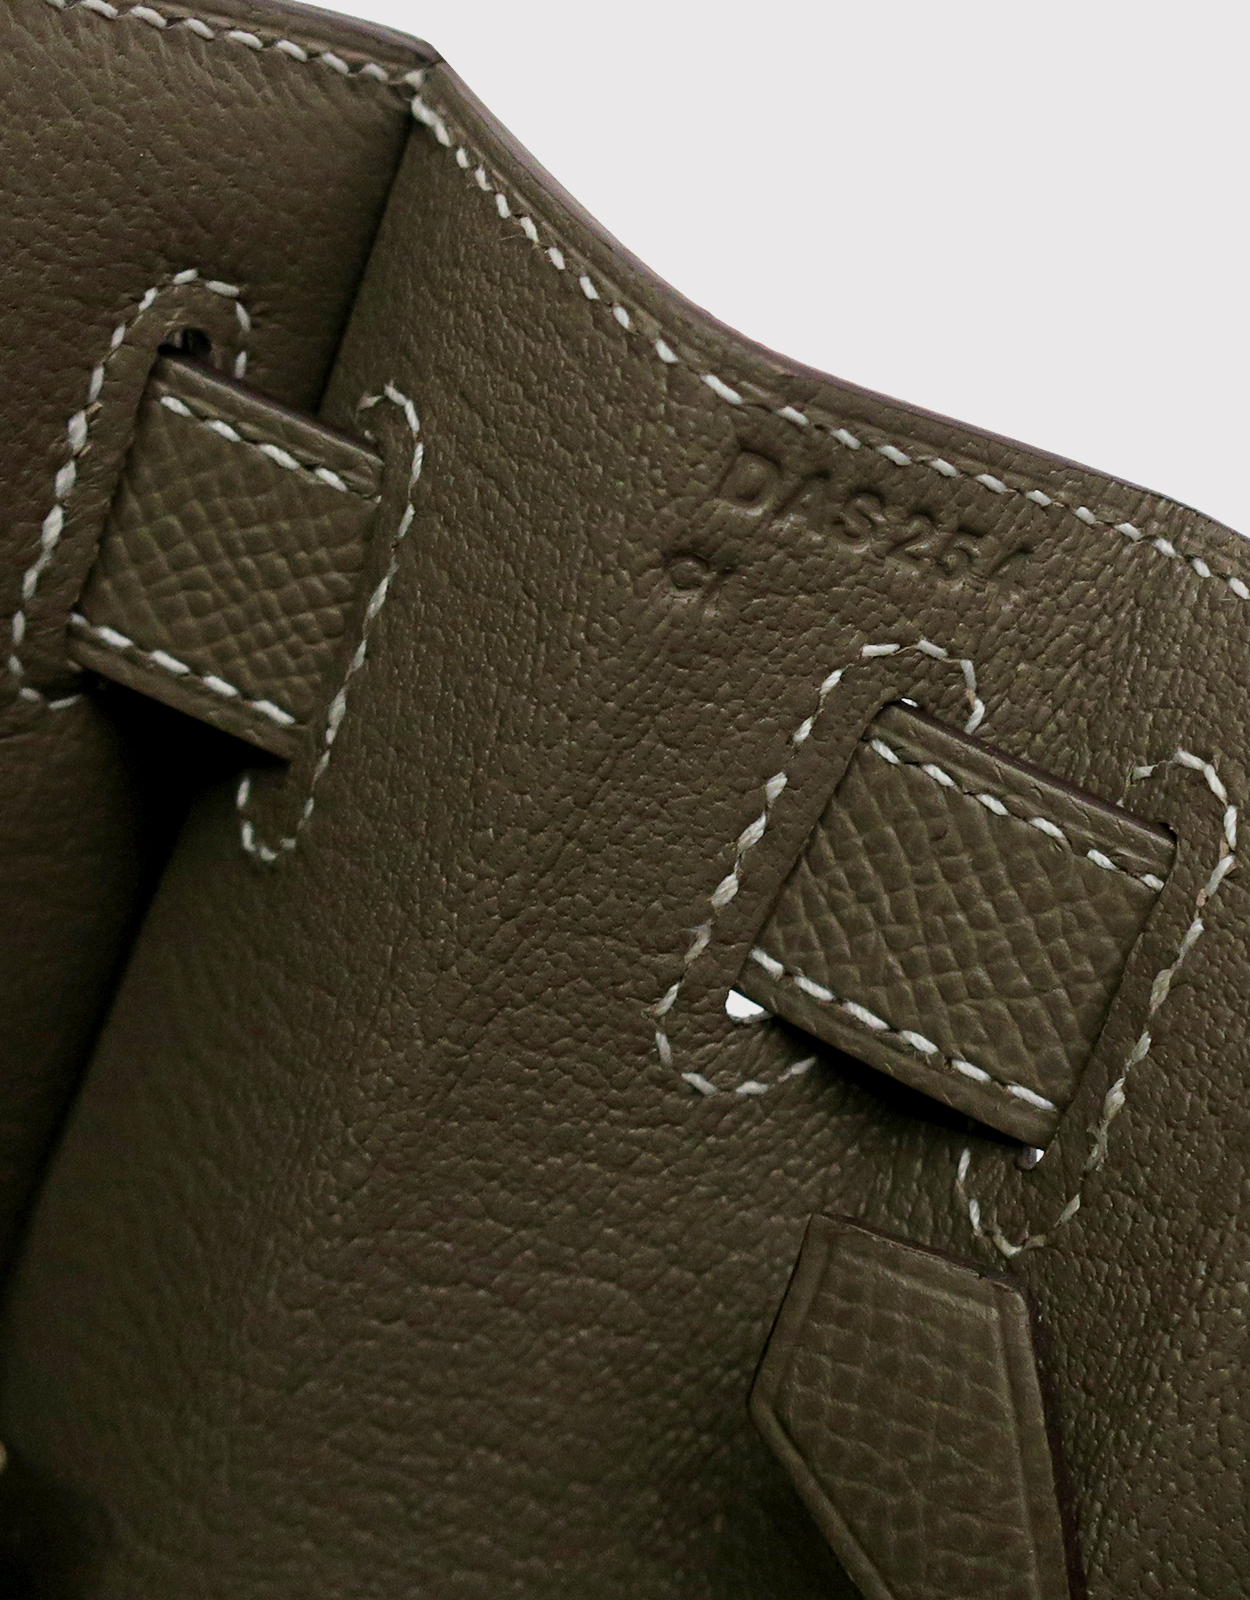 Hermès - Hermès Kelly 28 Togo Leather Handbag-Letter E Silver Hardware